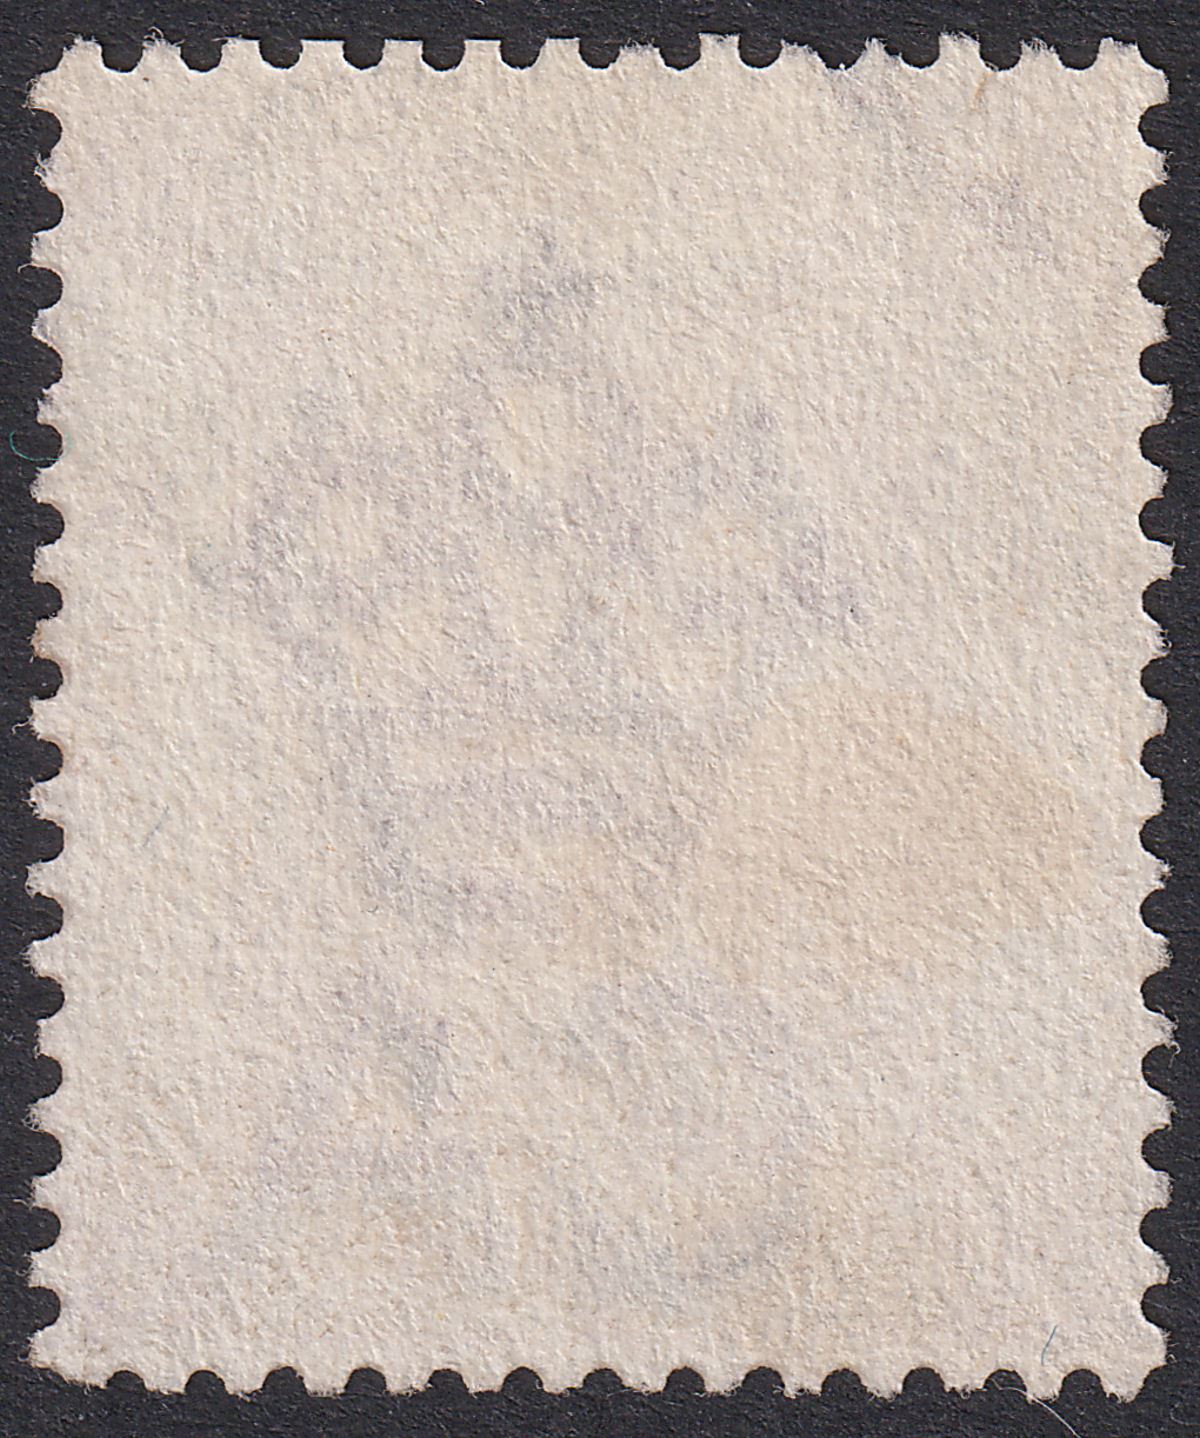 Hong Kong 1882 QV 2c Rose-Lake Used with C1 Postmark Canton SG Z159 cat £50